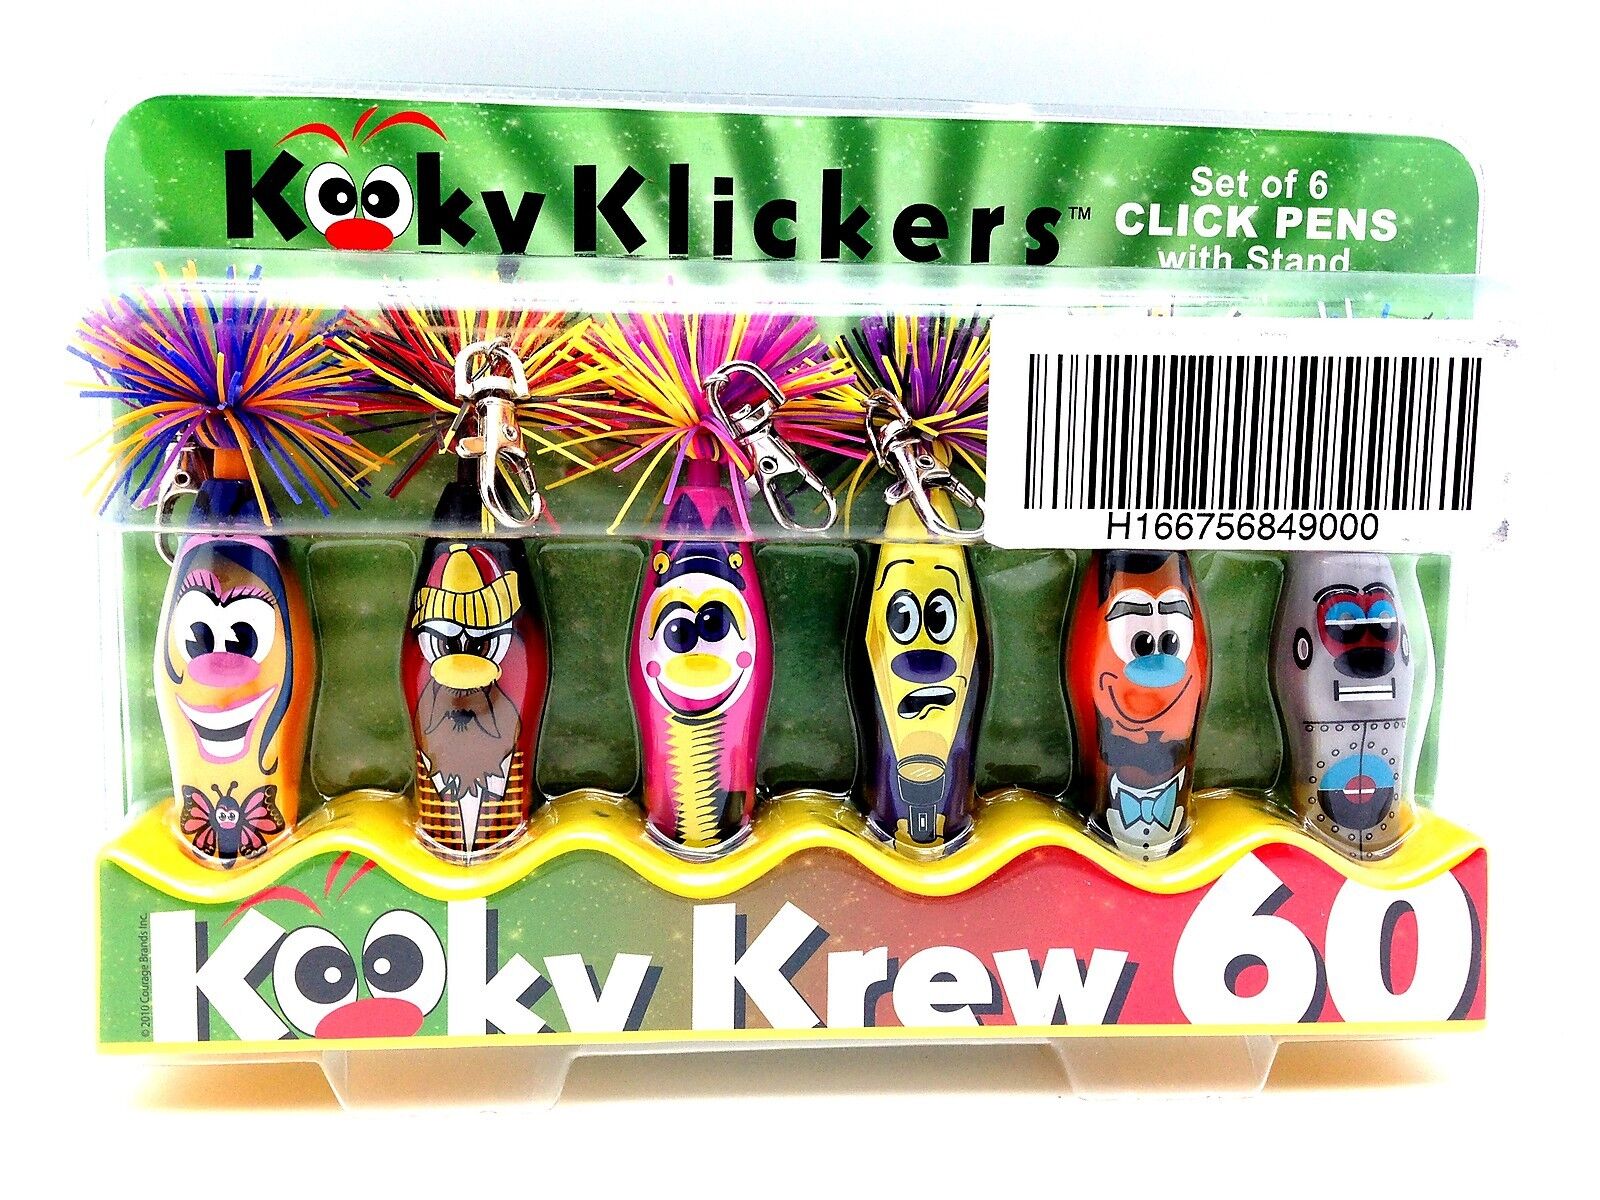 Kooky Krew 60 Klickers Click Pens Party Laser Honest Barley Annalise Jason CJest